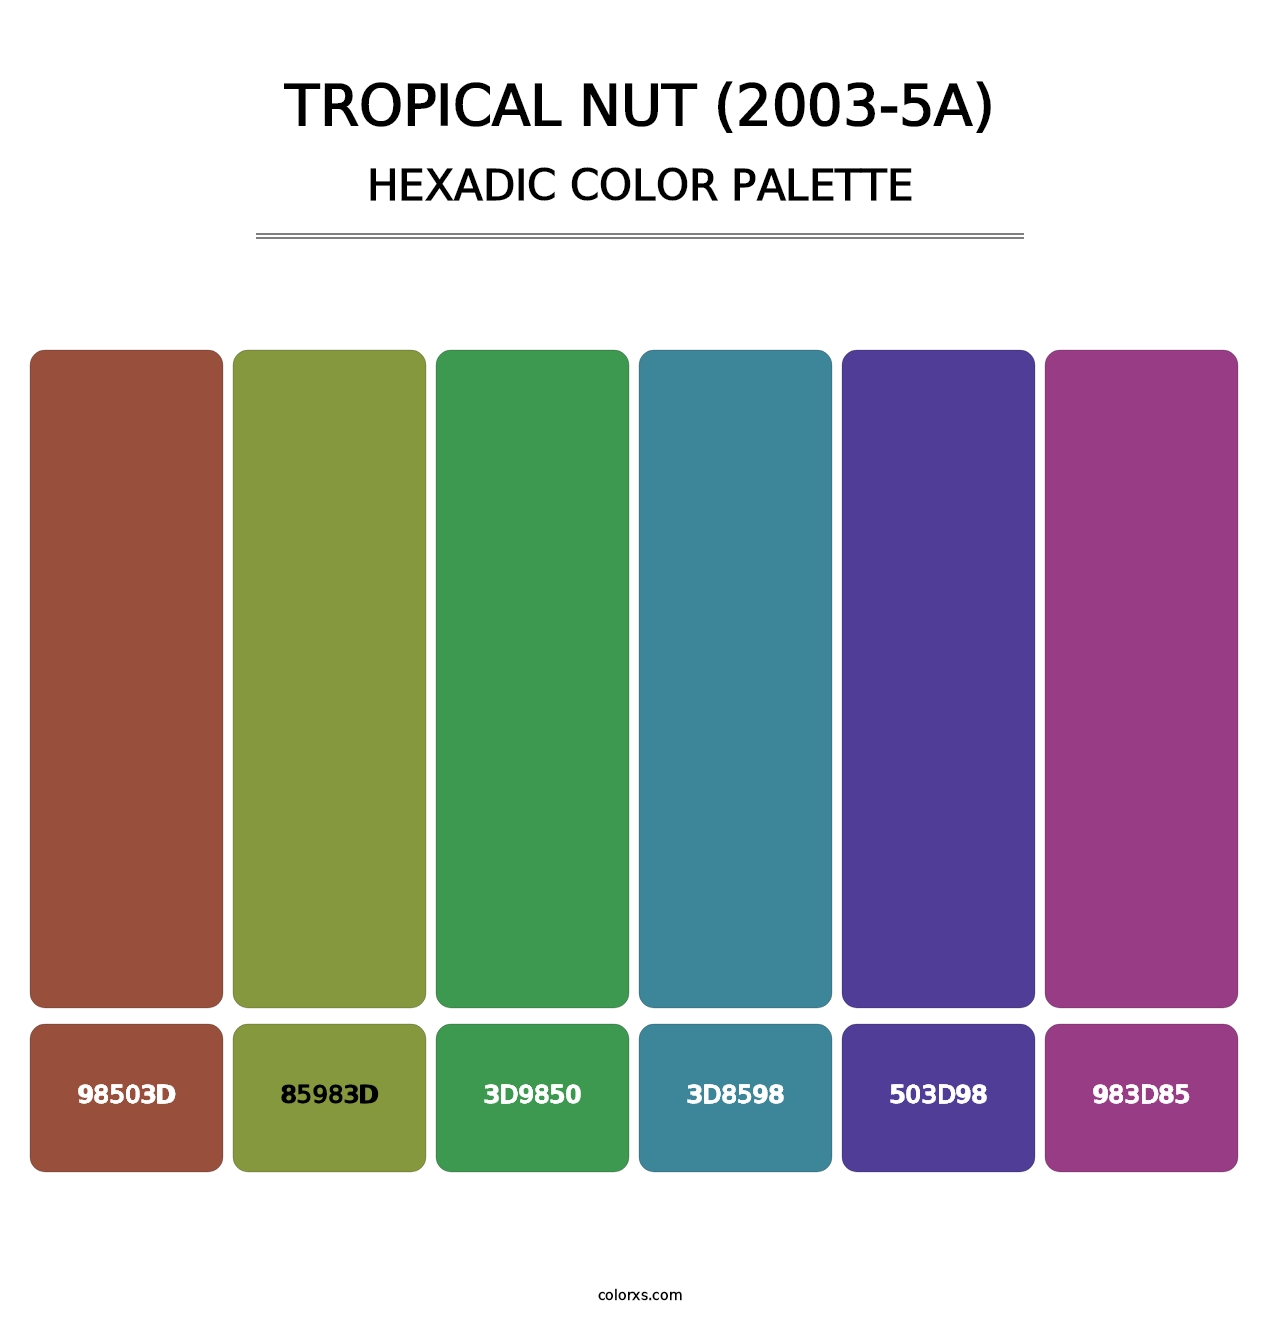 Tropical Nut (2003-5A) - Hexadic Color Palette